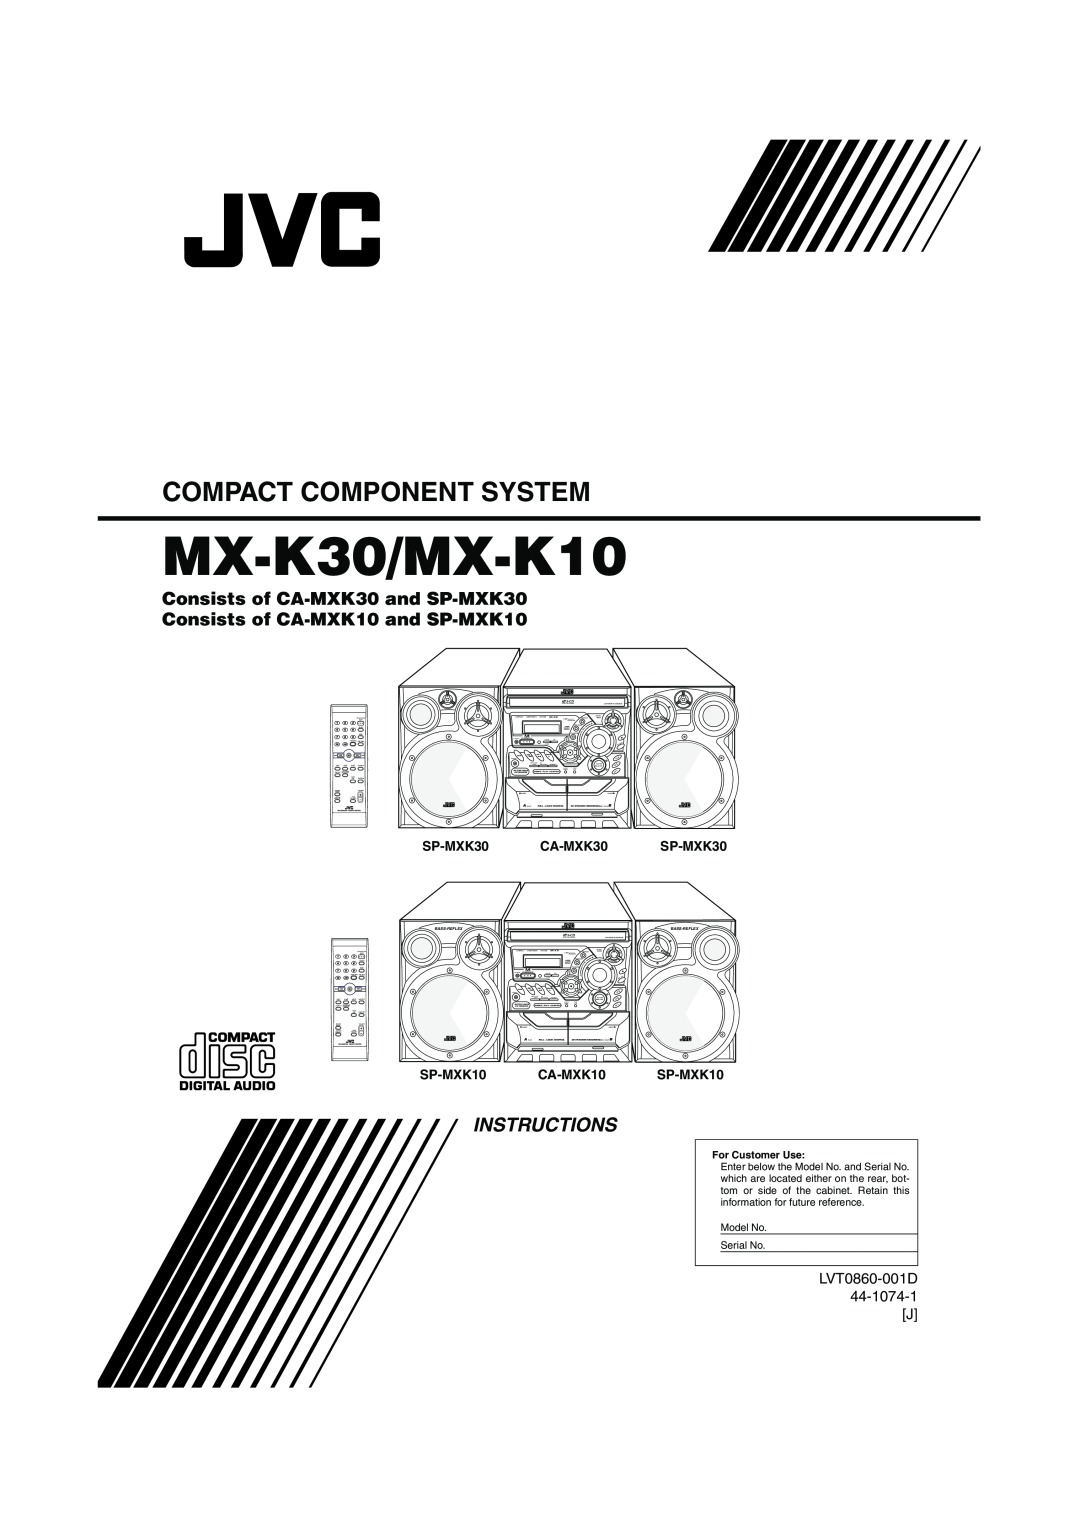 JVC manual MX-K30/MX-K10, Compact Component System, Instructions, SP-MXK30, SP-MXK10 CA-MXK10, For Customer Use 